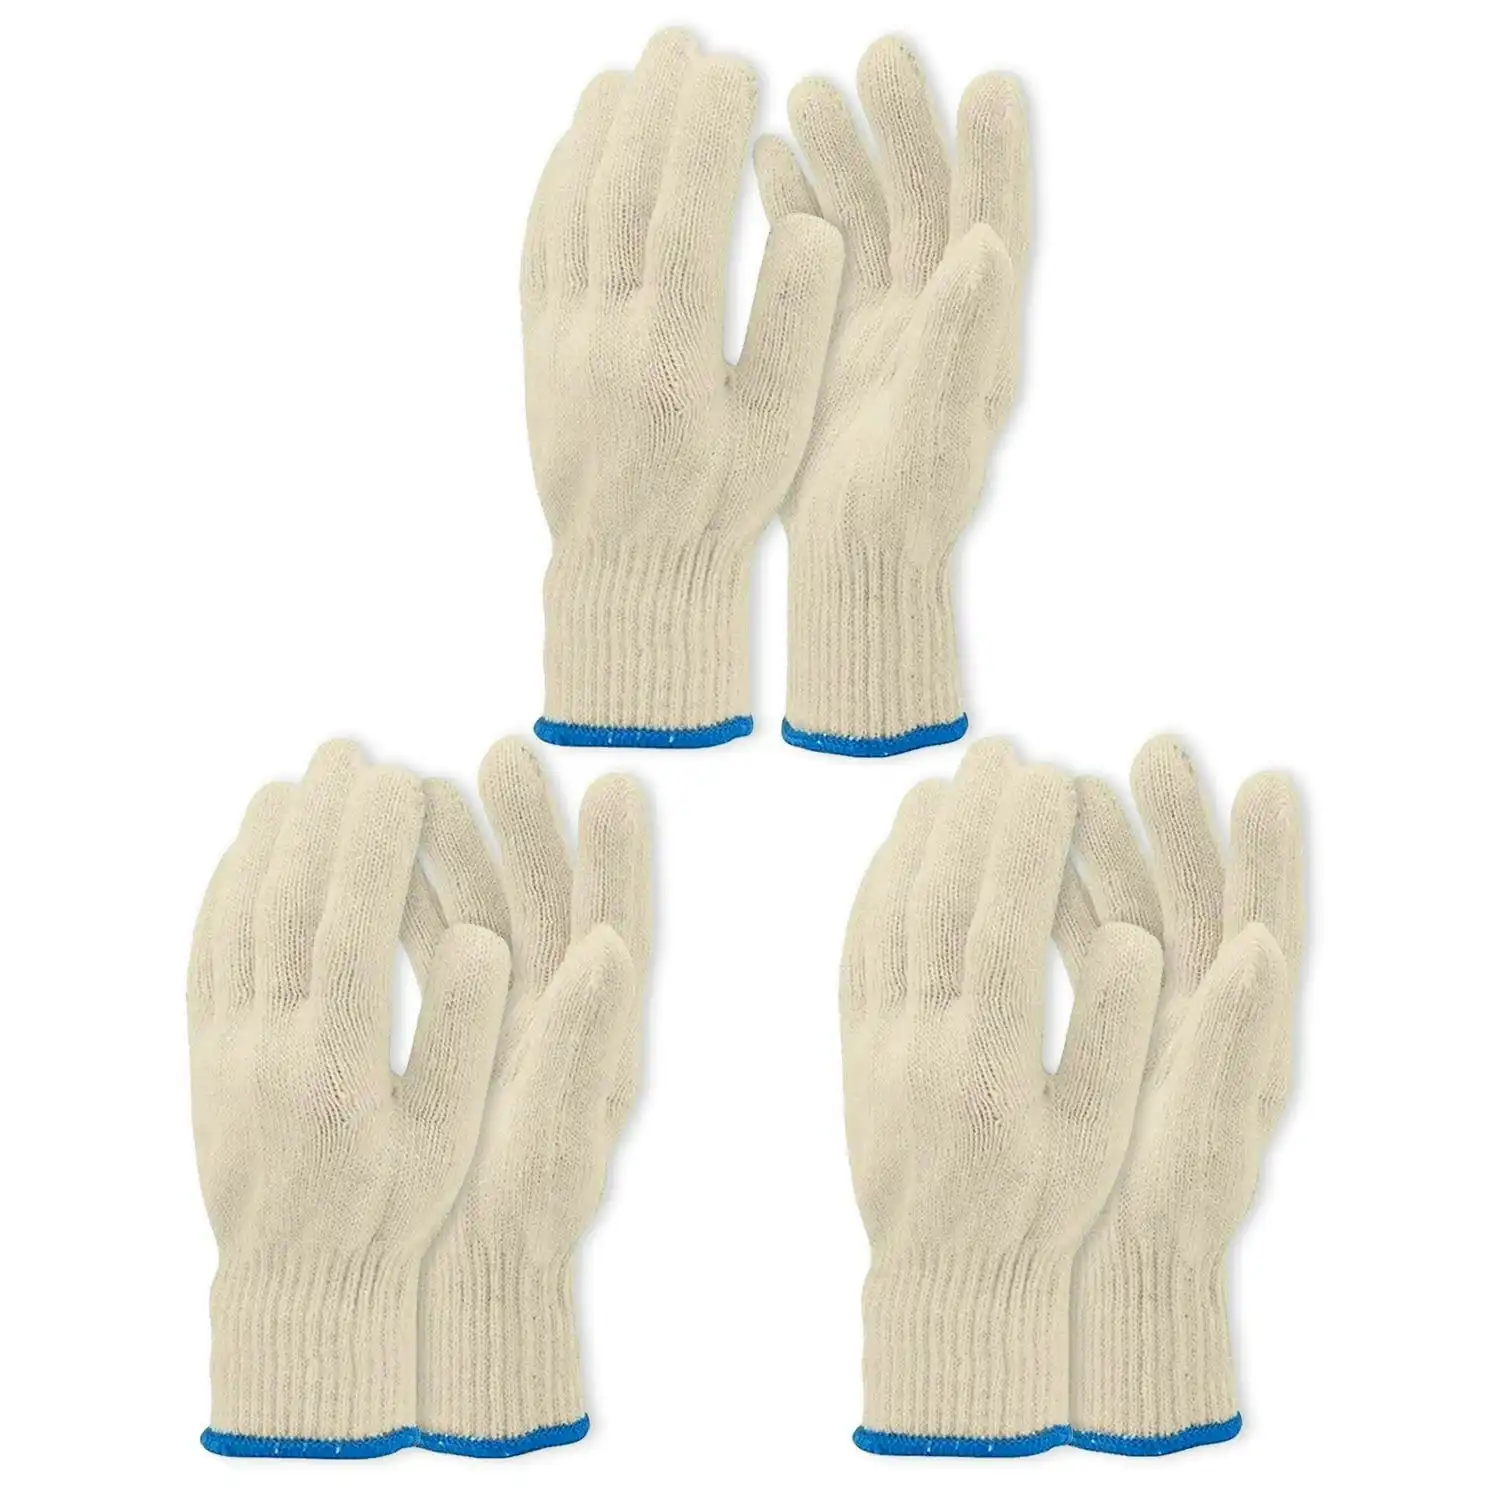 3 Pair 5 Finger Oven Mitt BBQ Grill Gloves